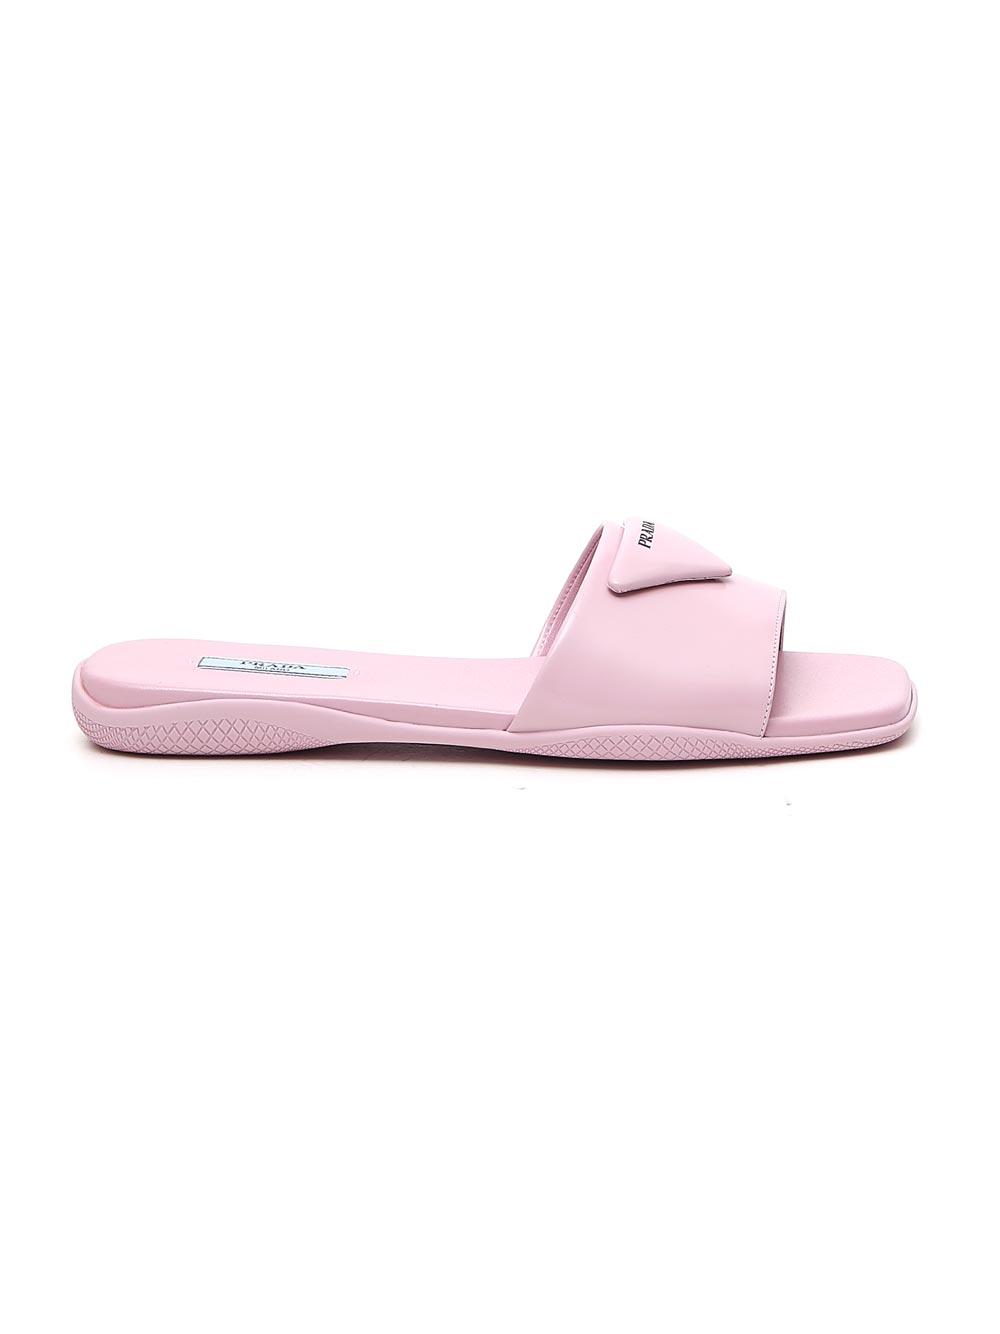 Prada Leather Triangle Logo Slide Sandals in Pink - Lyst